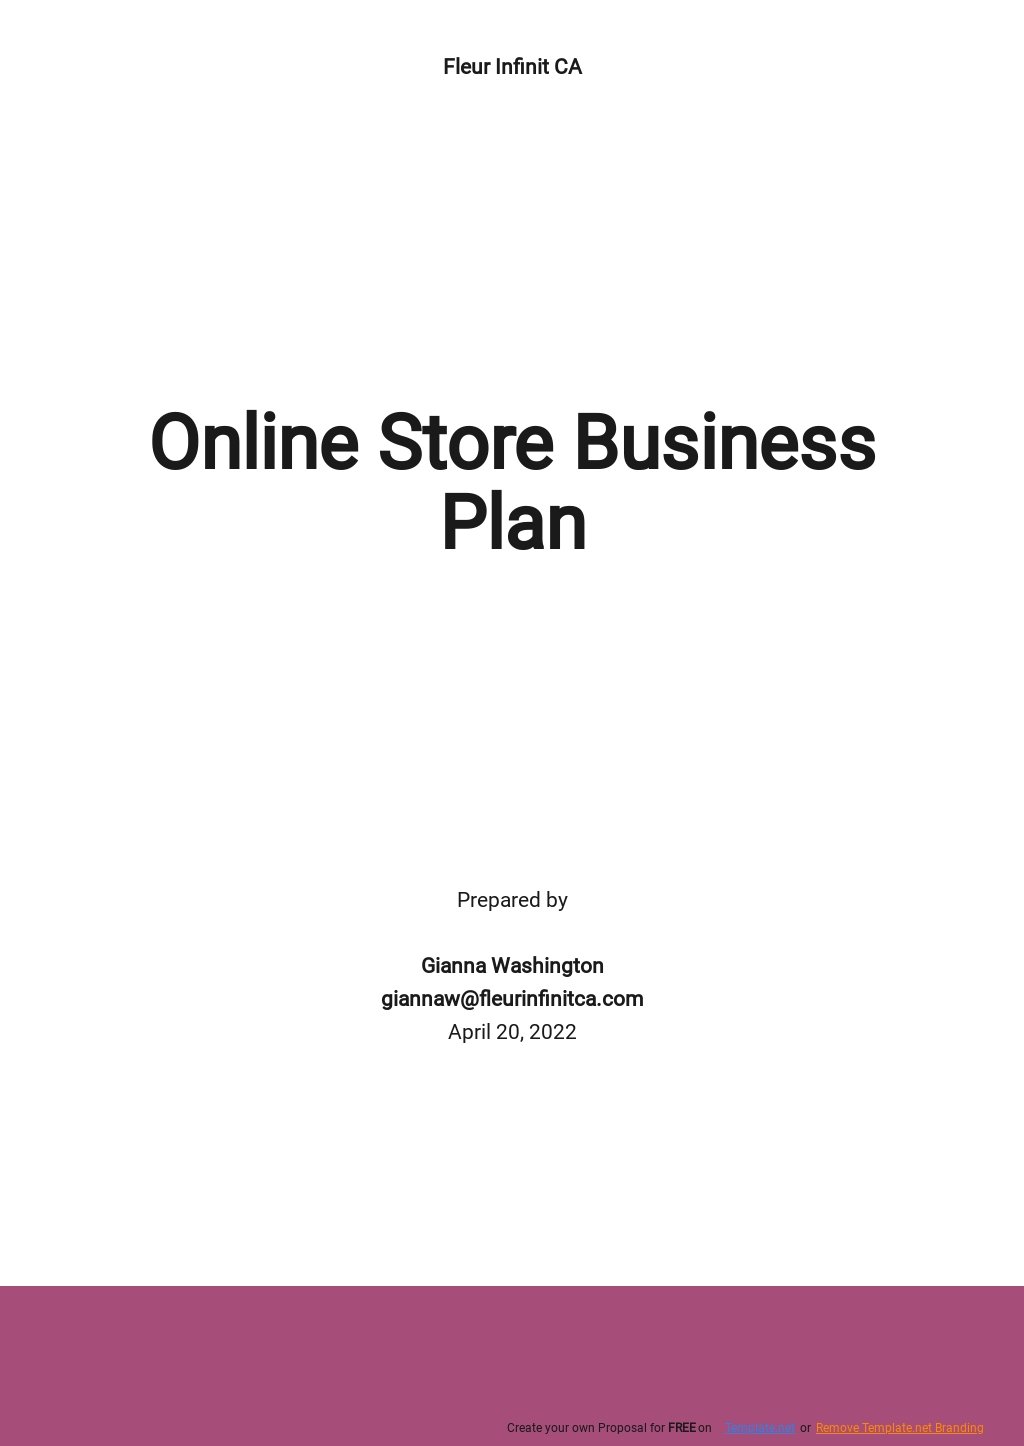 Online Store Business Plan Template - Google Docs, Word, Apple In Online Store Business Plan Template